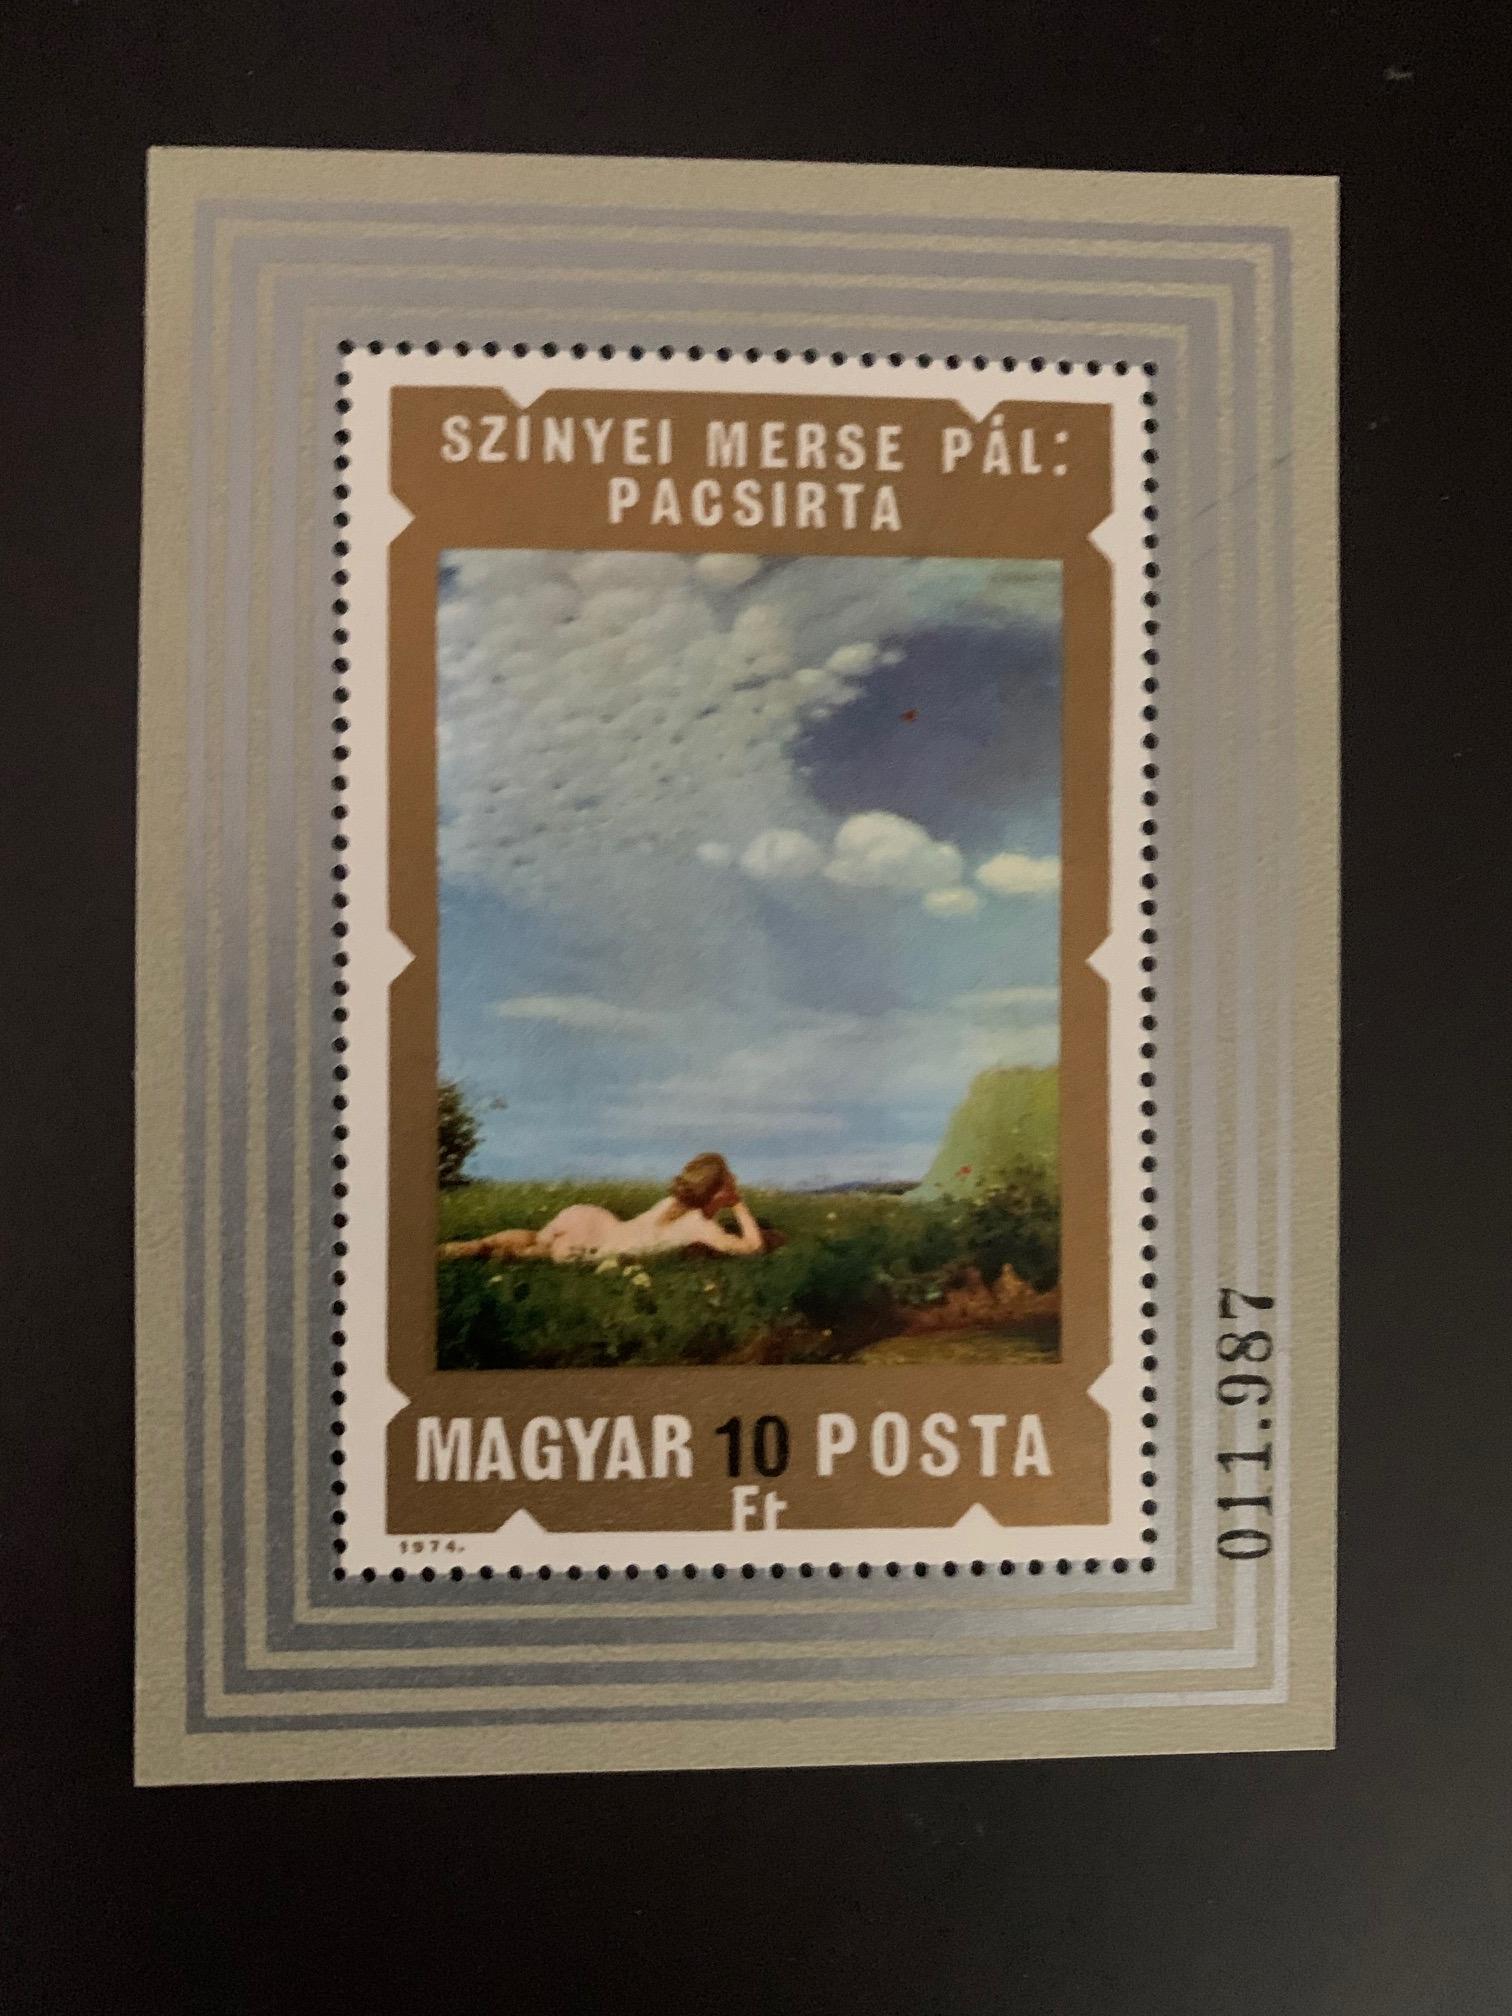 Jug 215 1974 Magyar Posta Painting Art stamp (MNH) 